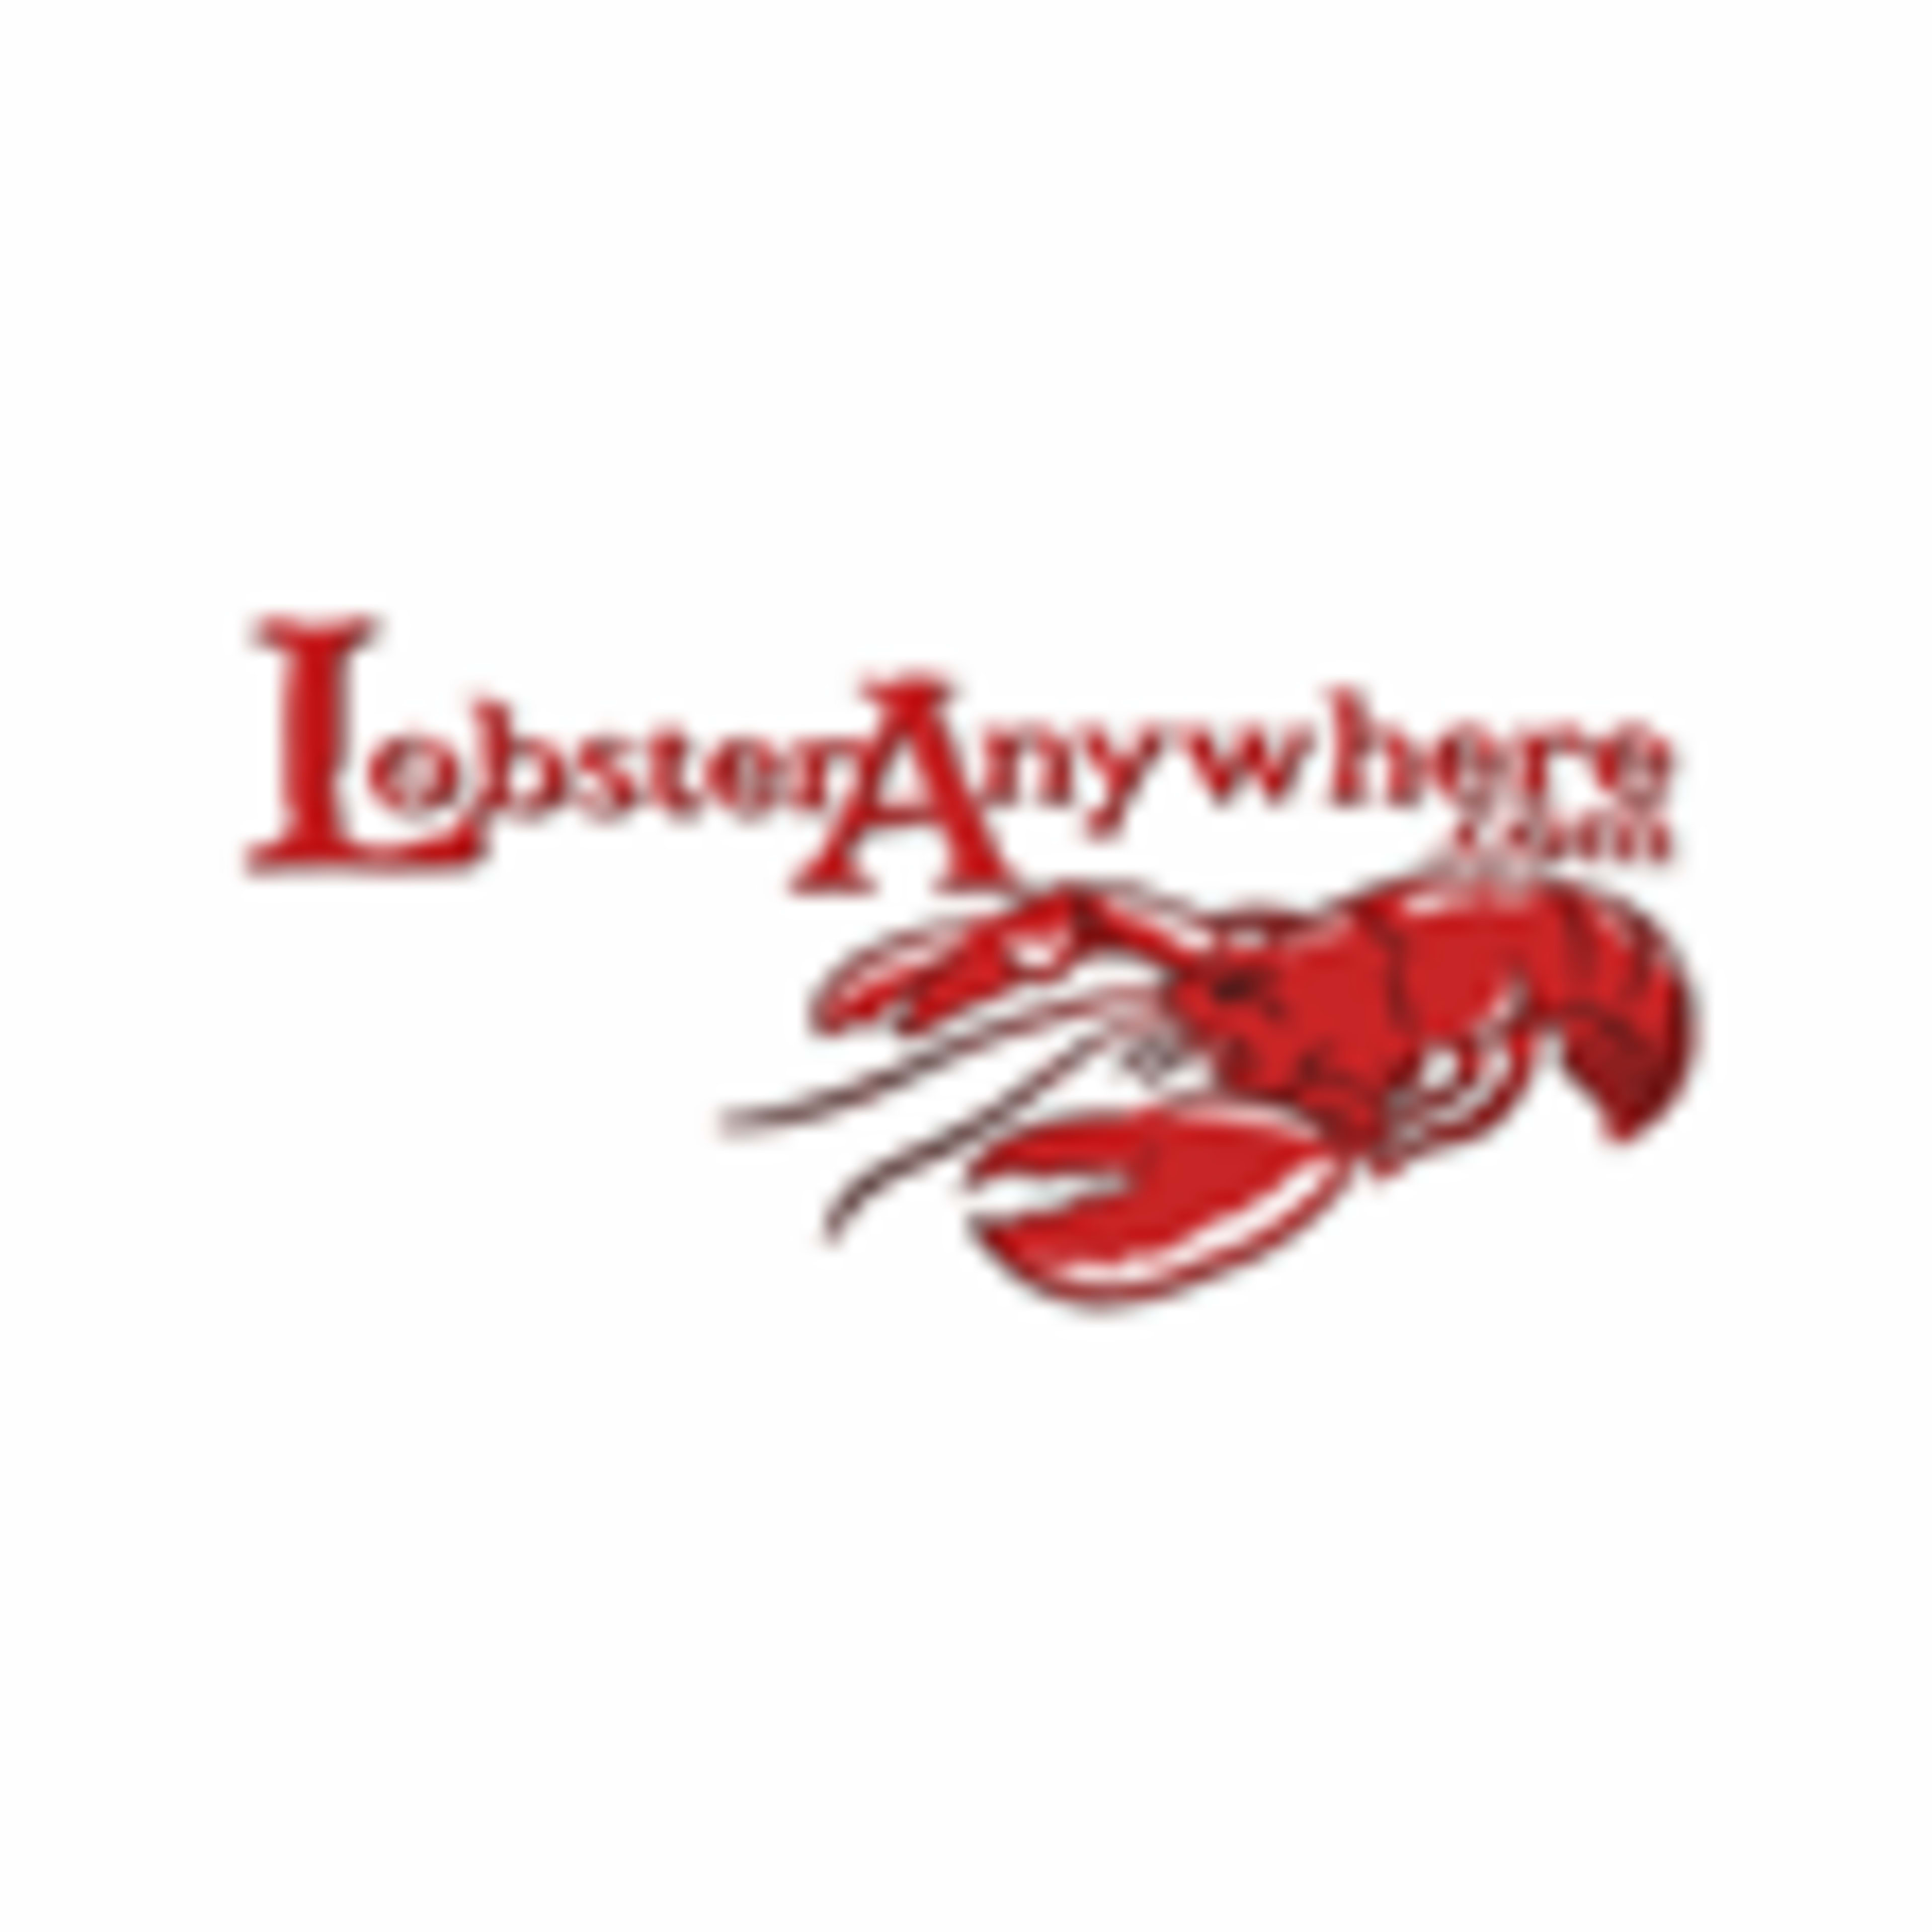 Lobster Anywhere Code